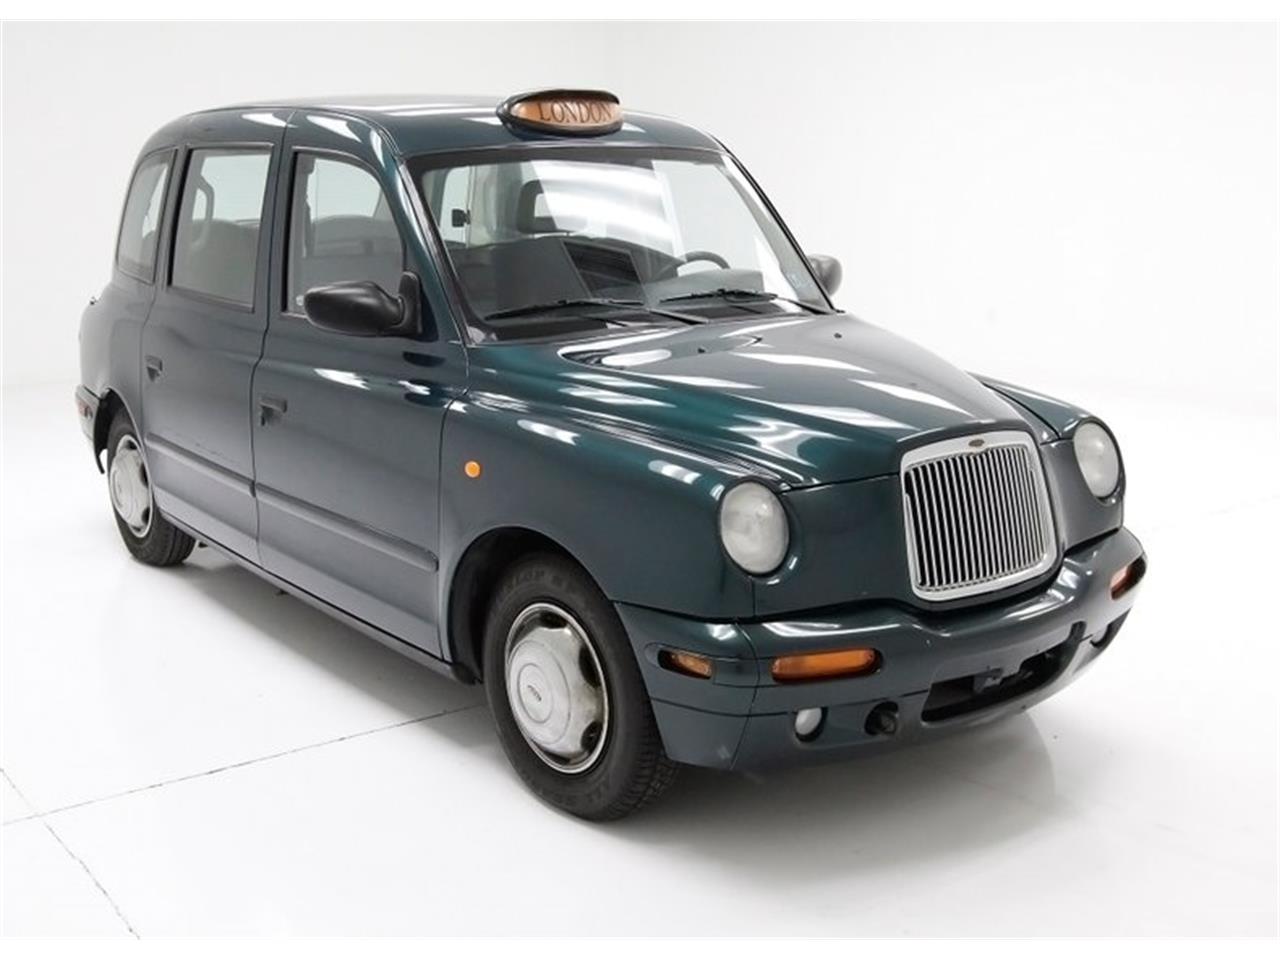 2004 London Taxi for Sale | ClassicCars.com | CC-1186535